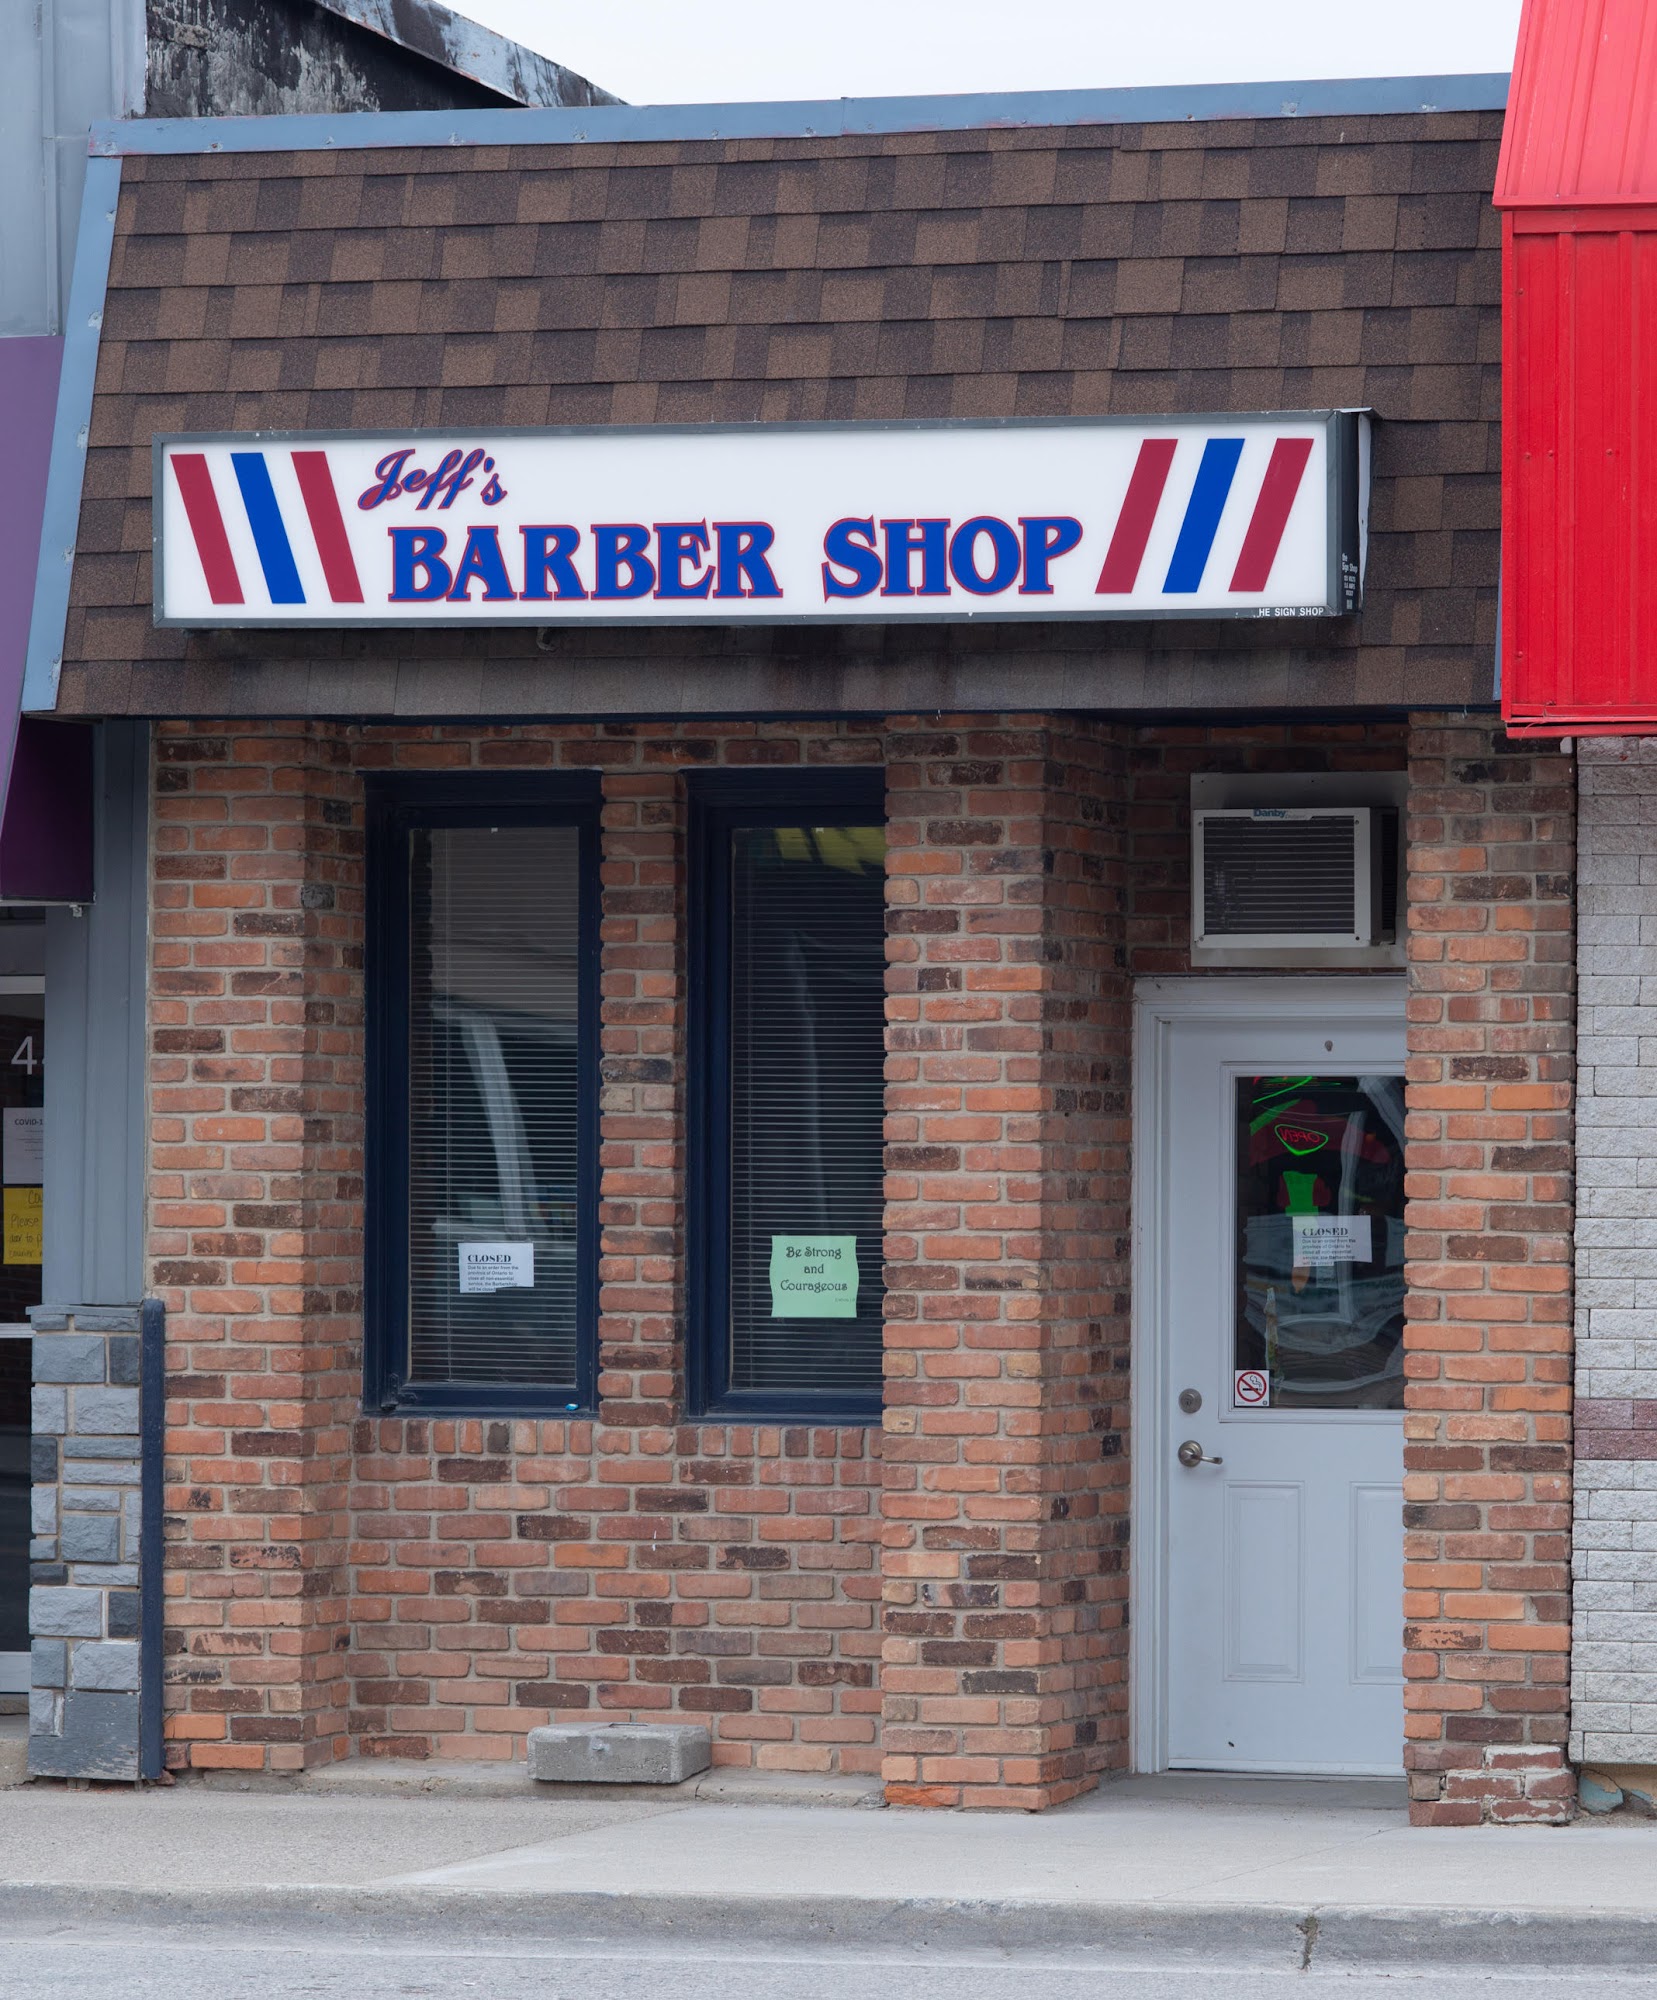 Jeff's Barber Shop 455 St George St S, Dresden Ontario N0P 1M0